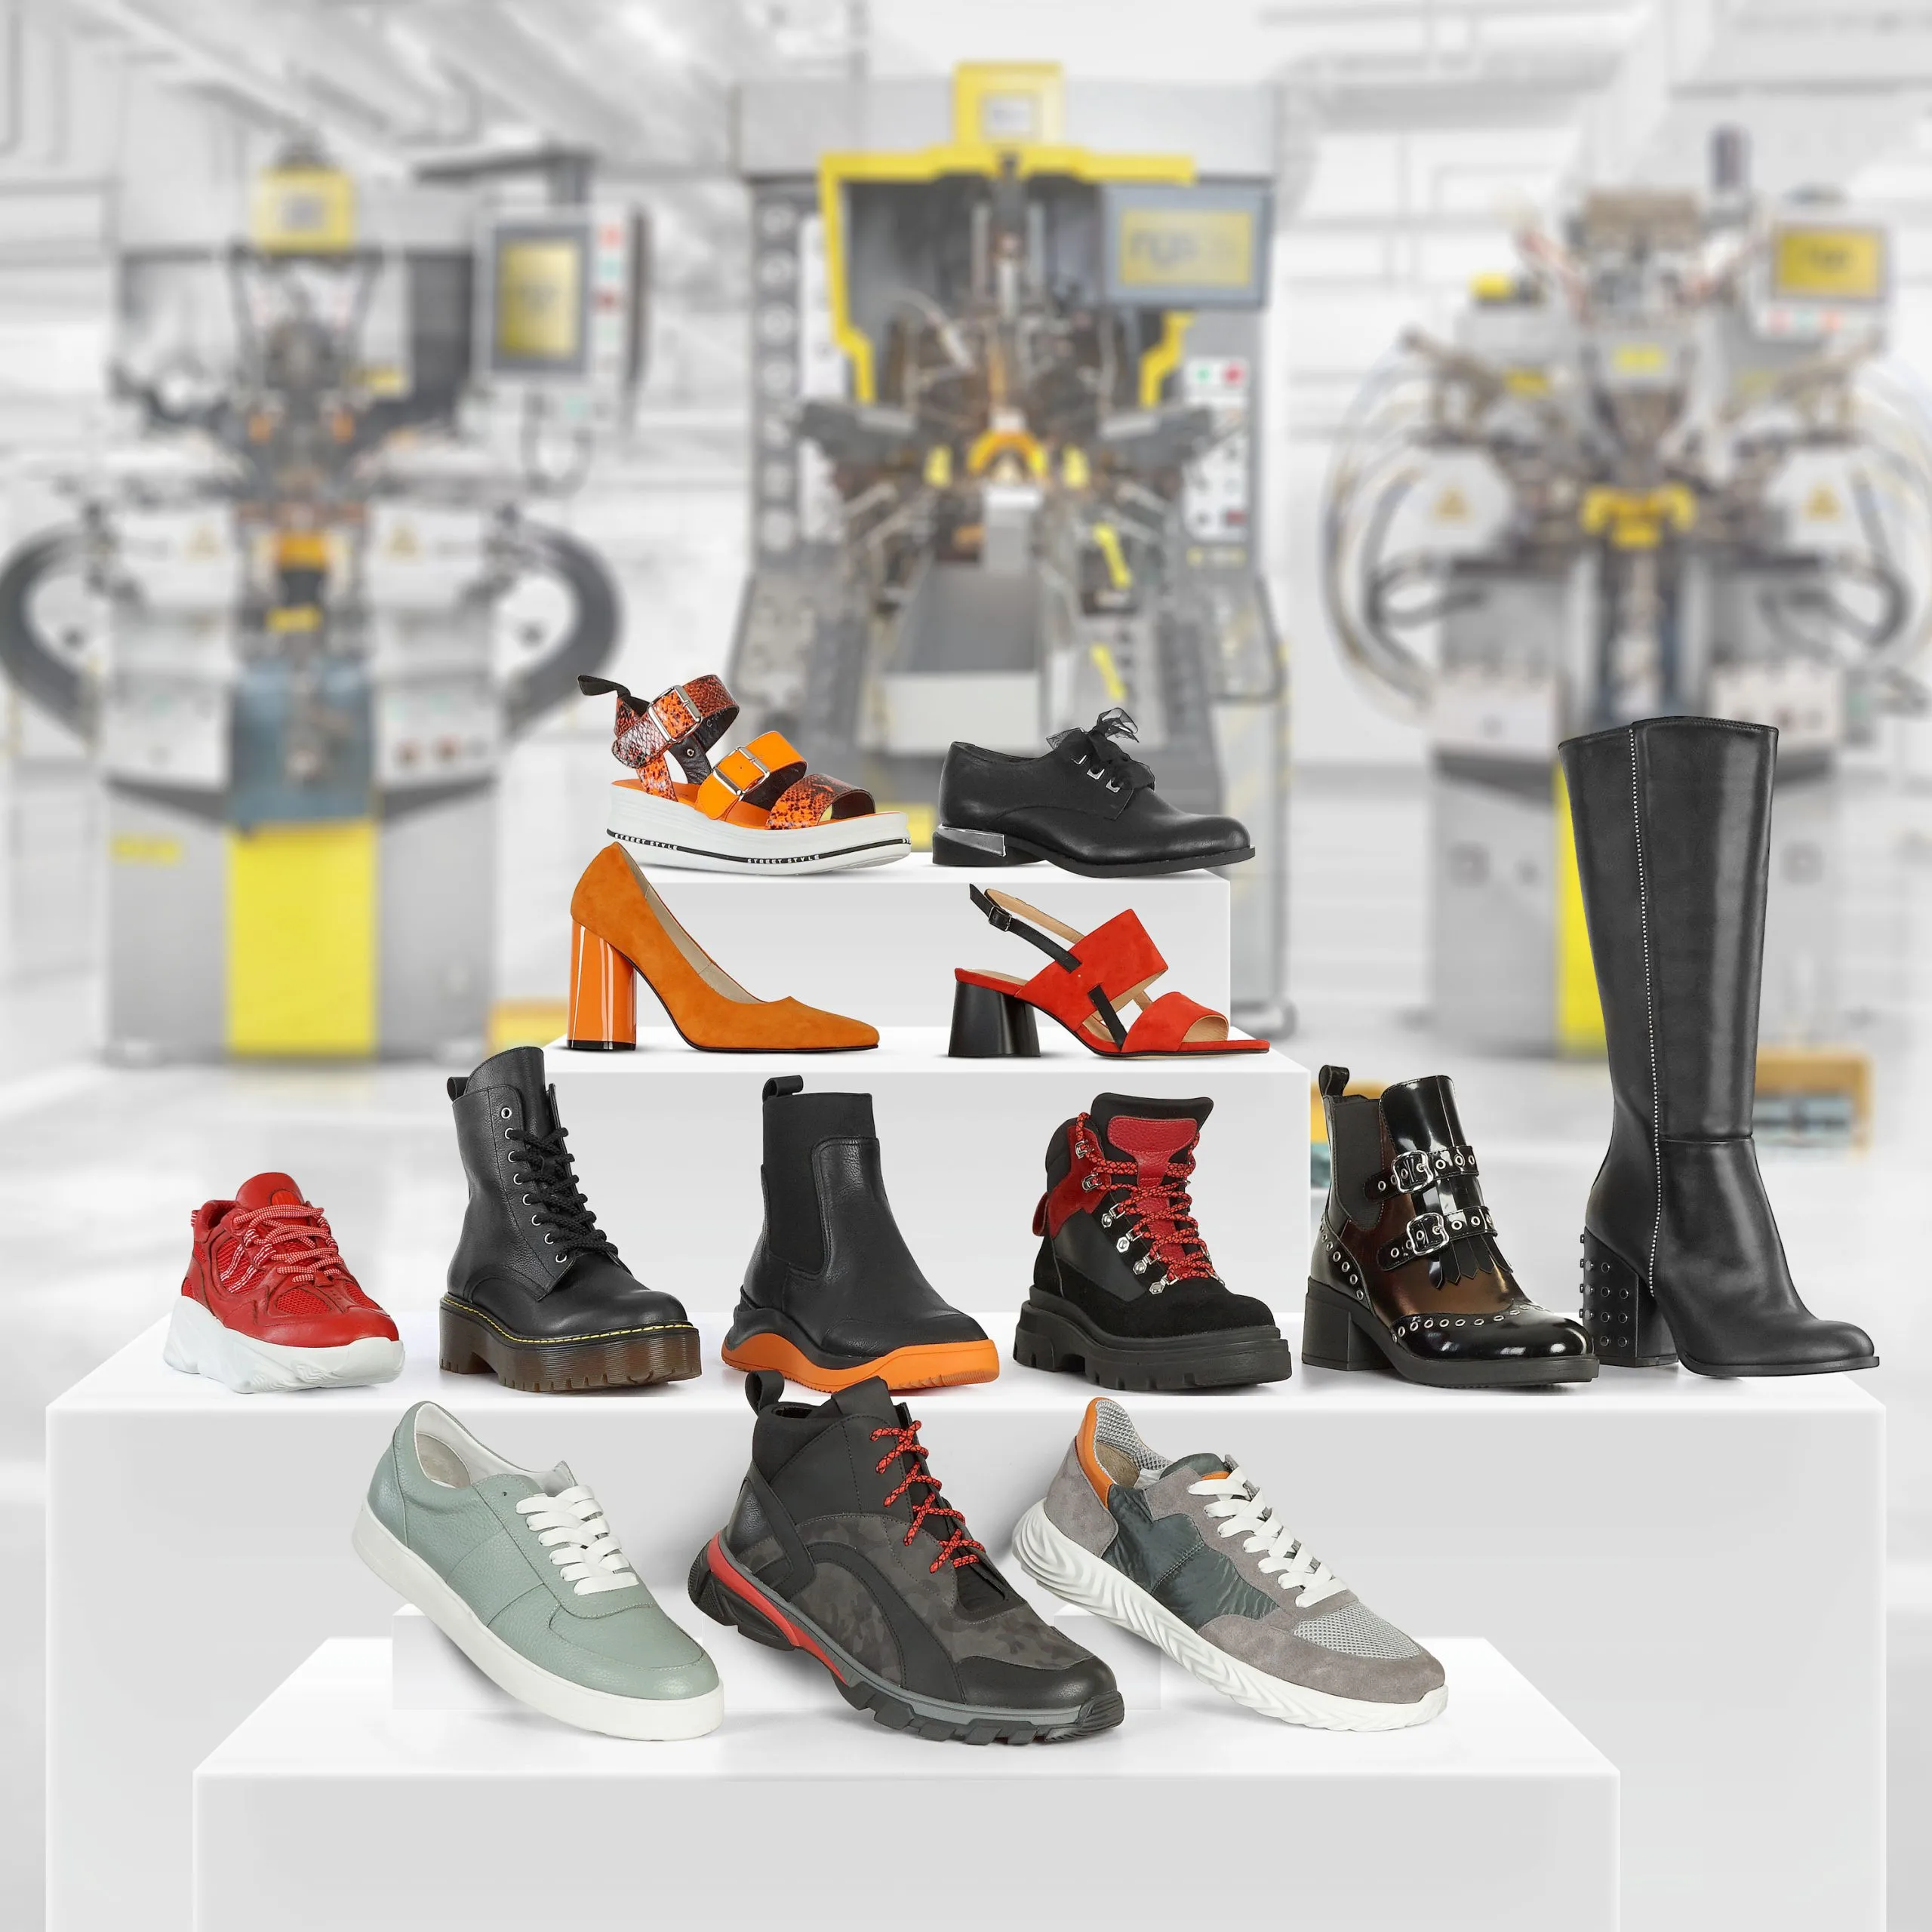 Shoe manufacturing equipment